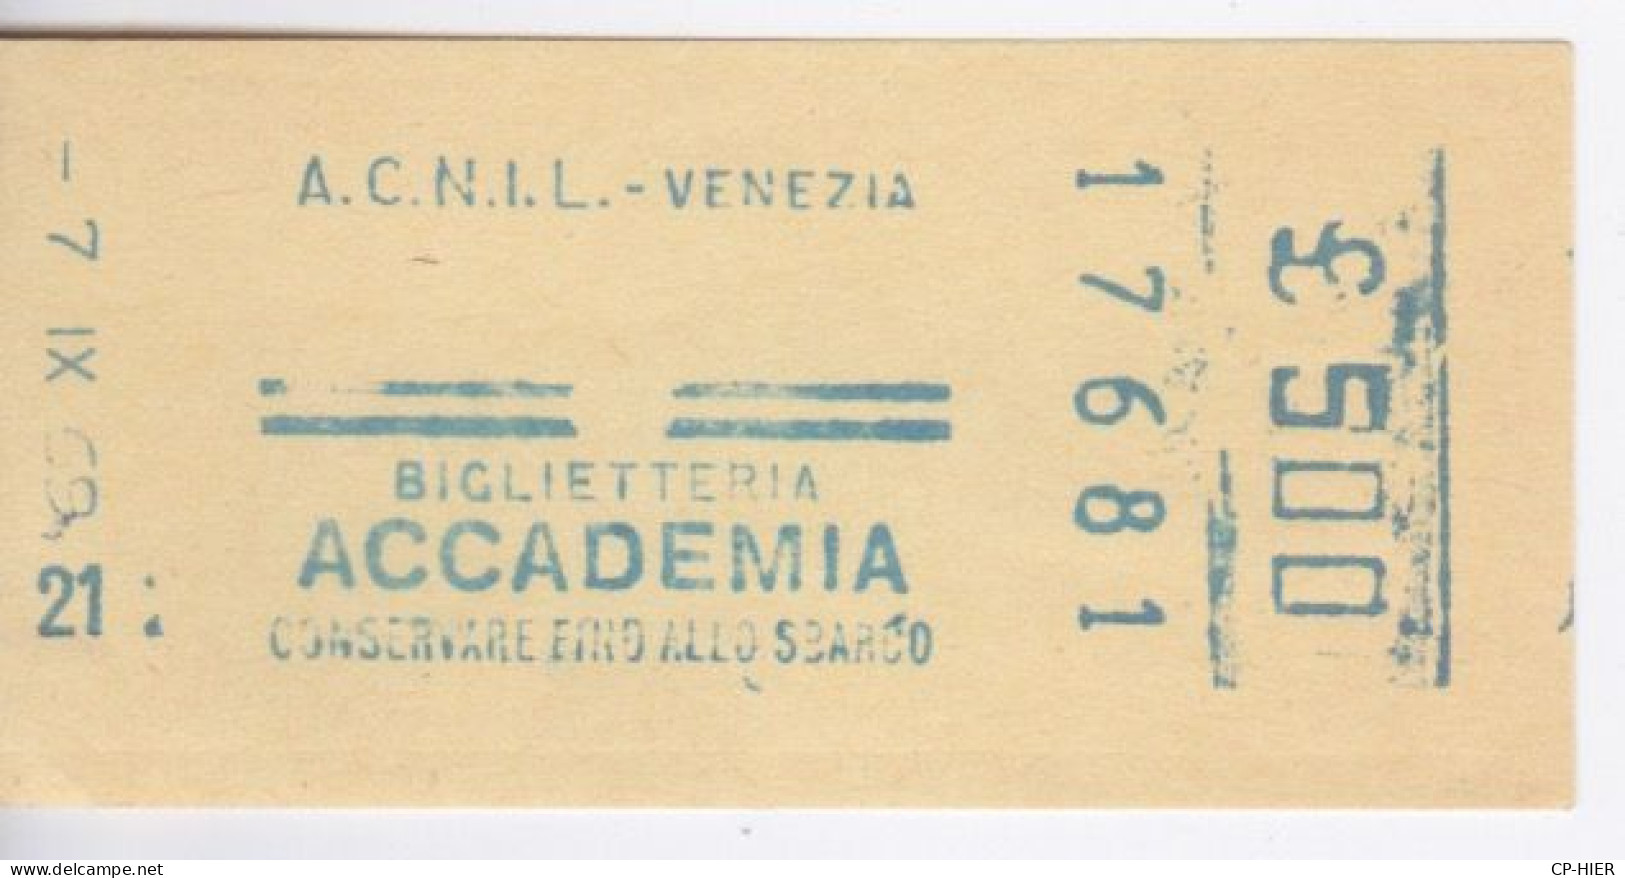 TICKET - ITALIE -  METRO BUS TRAMWAY  A.C.N.I.L - VENEZIA  BILLET ACCADEMIA - Europa